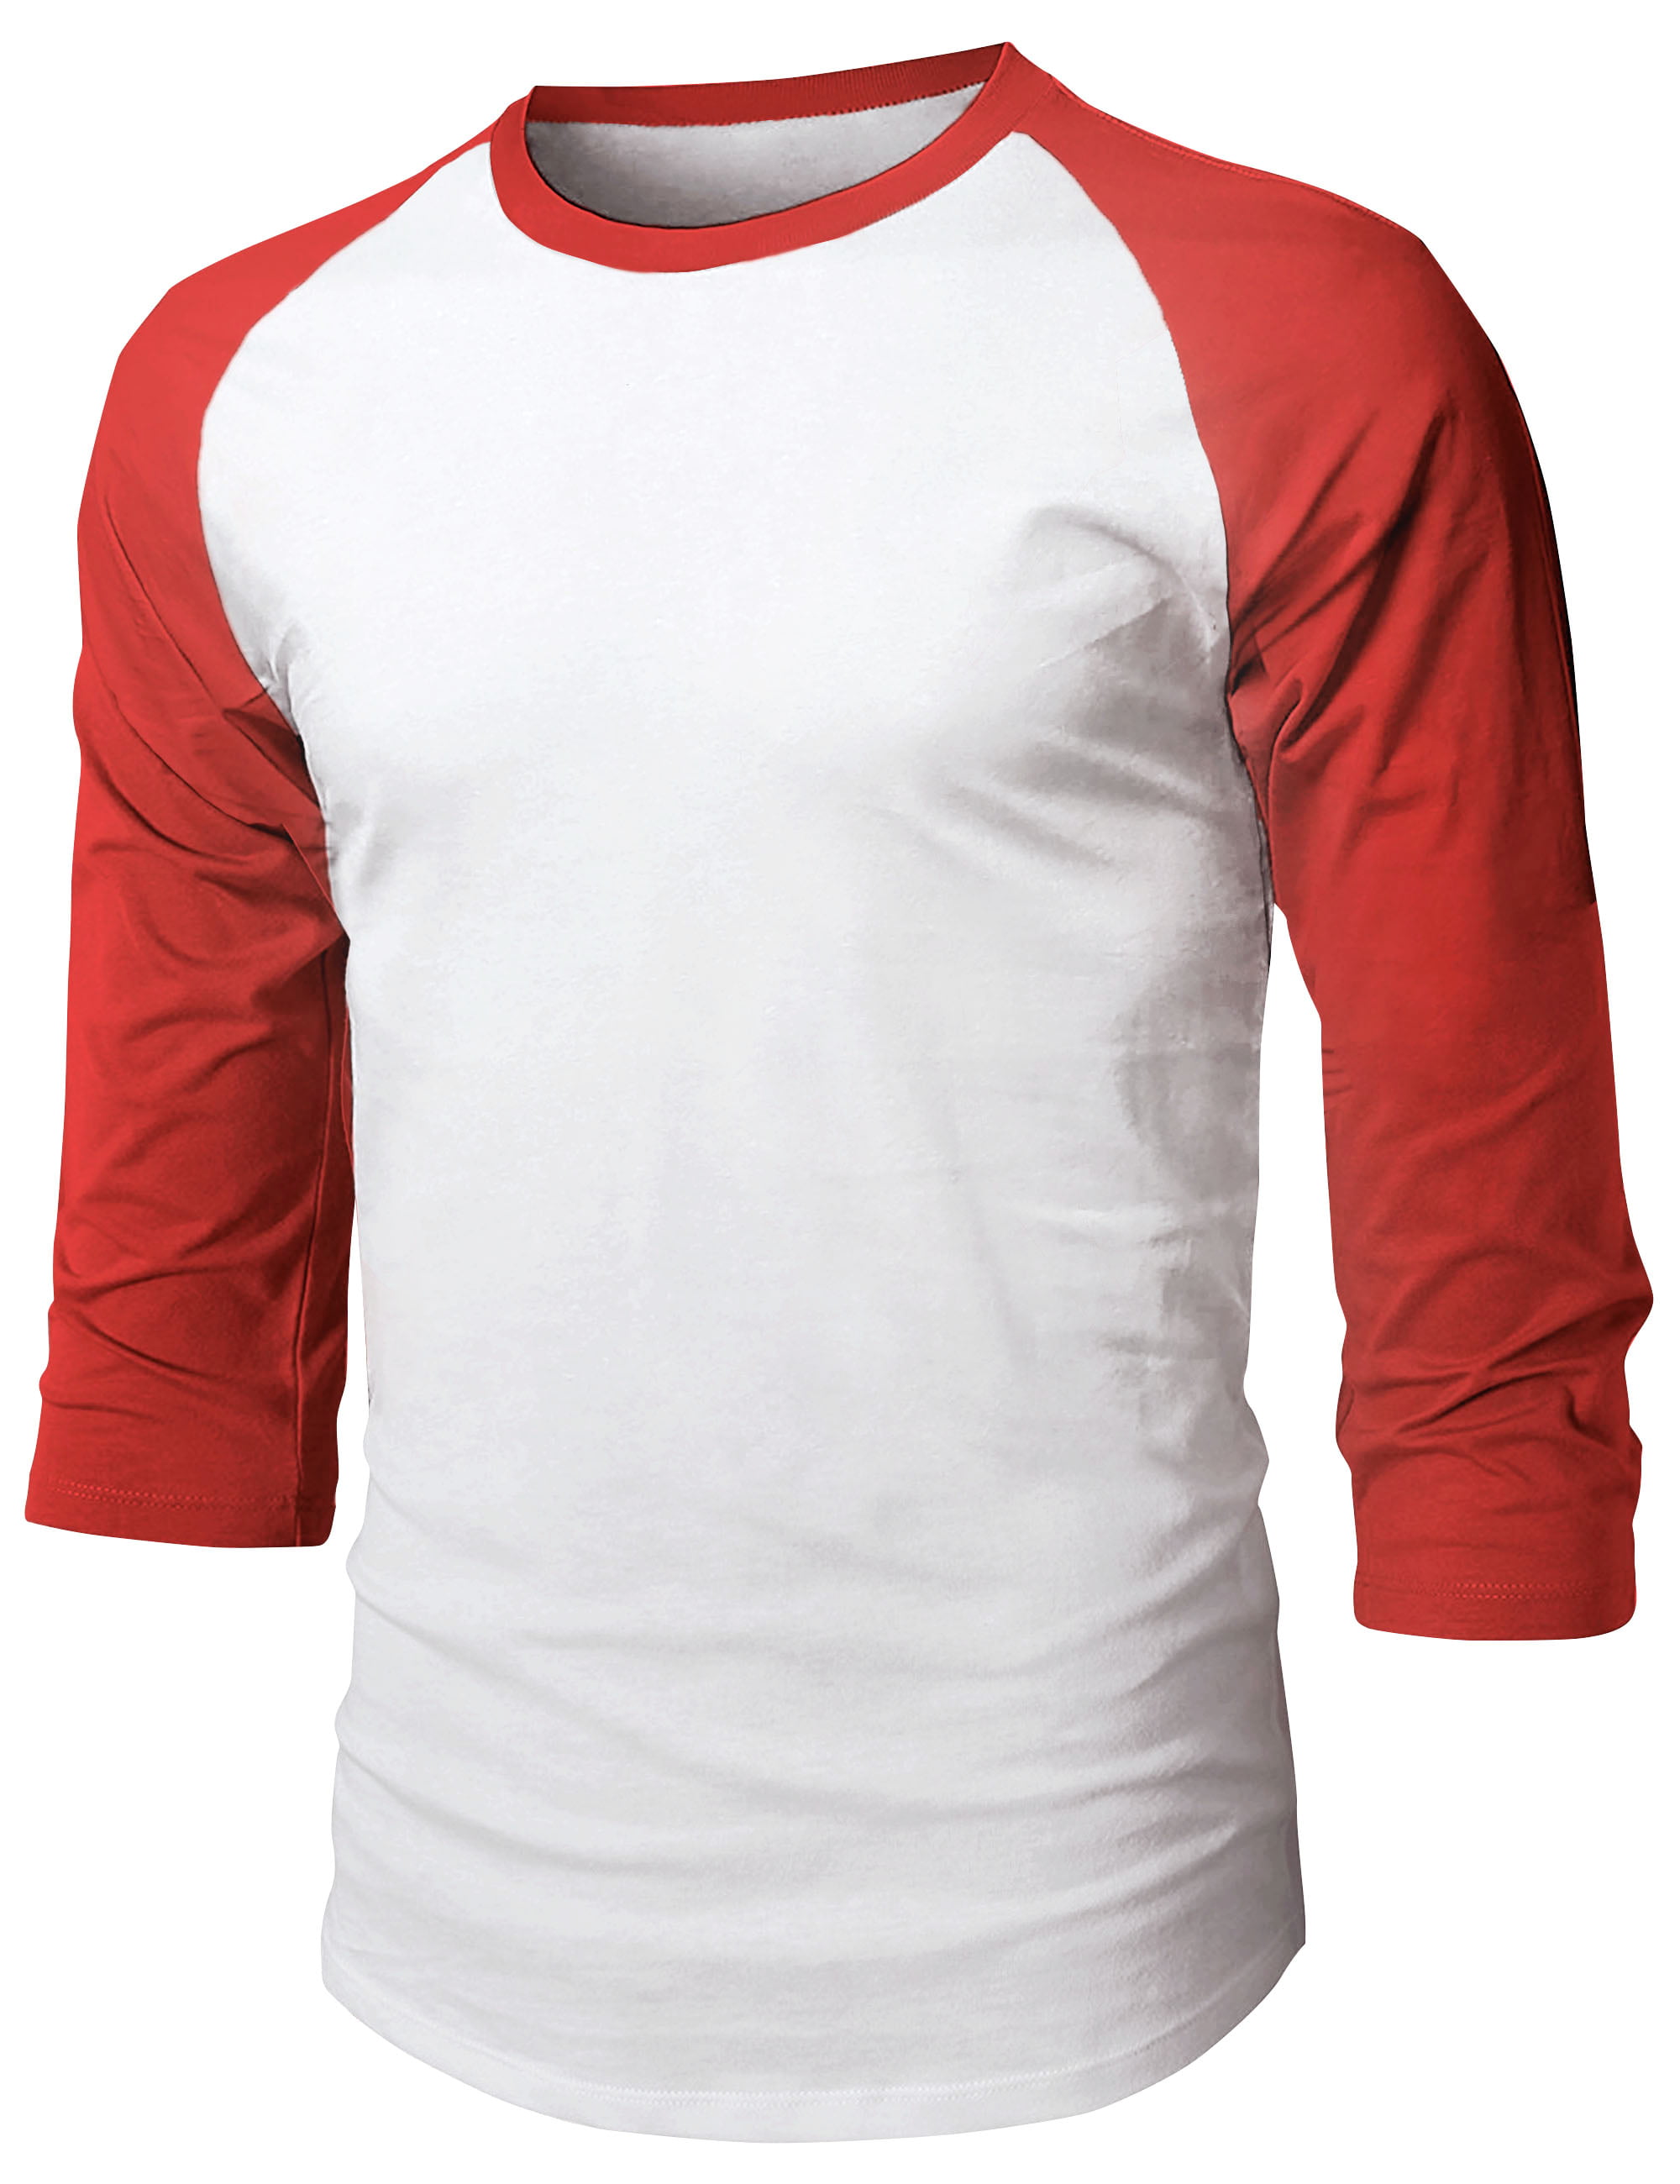 Mens Baseball Jersey T Shirt Raglan Stripe Sports Team Hipster Tee Casual S-3X 